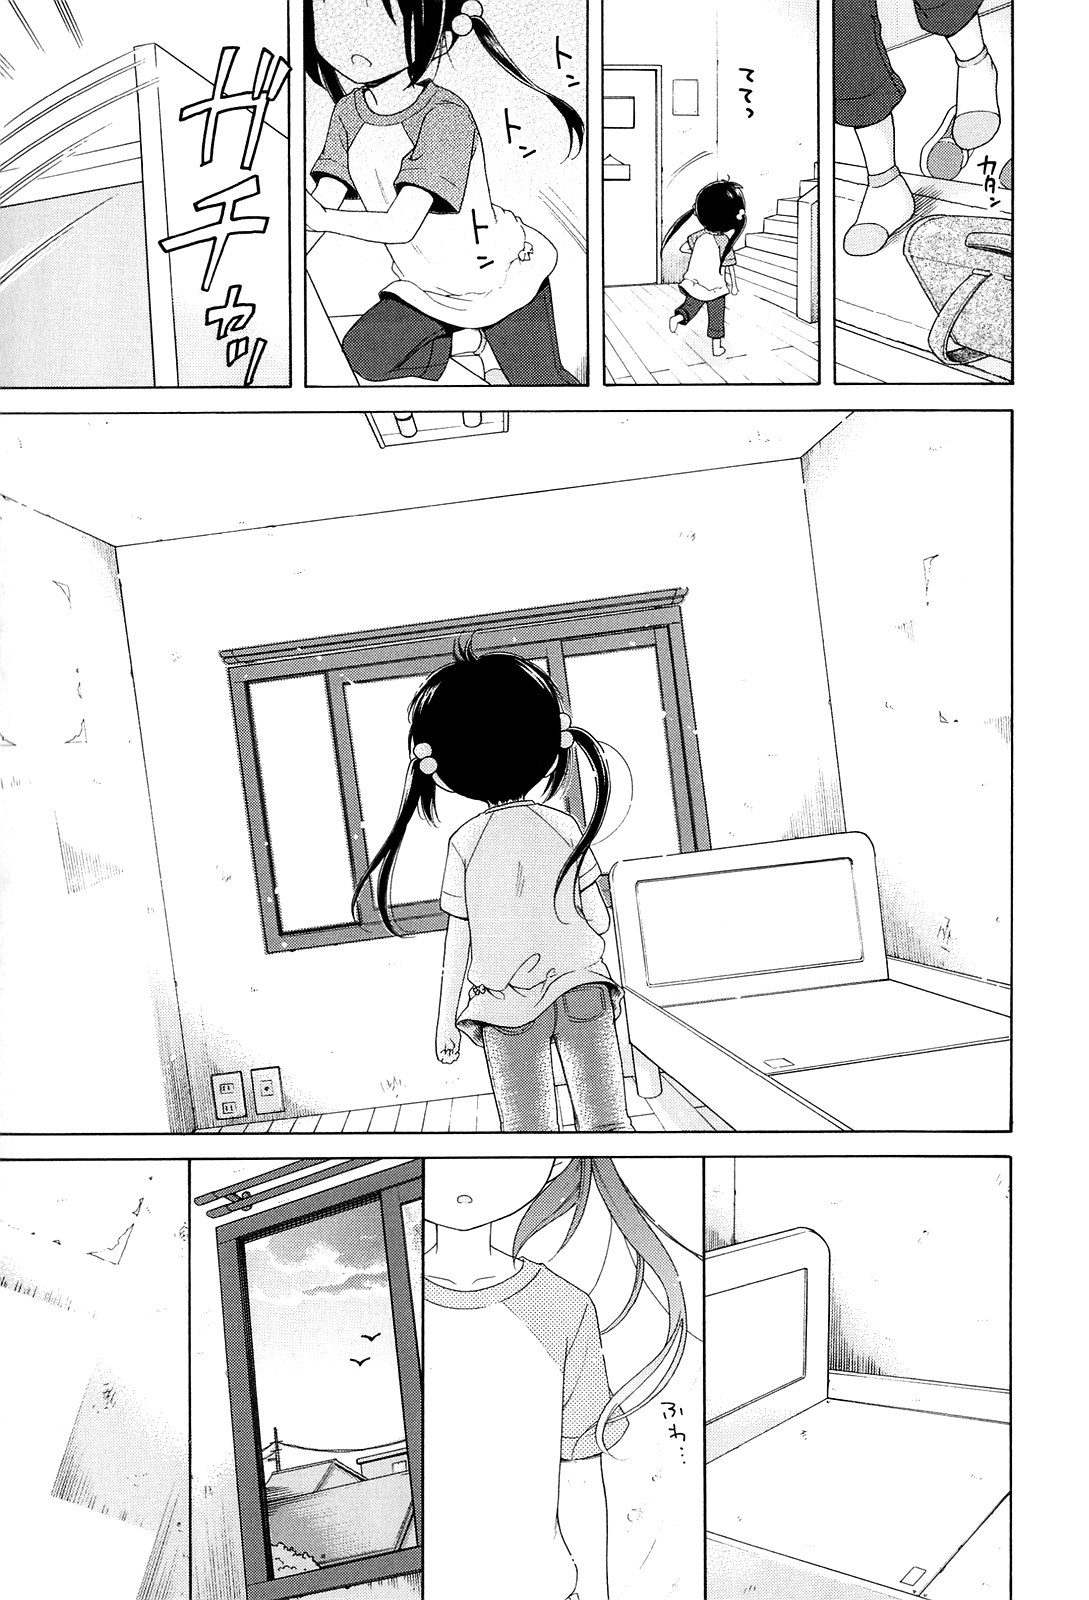 The Light of Tsukimi Manor 1-6 hentai manga picture 138